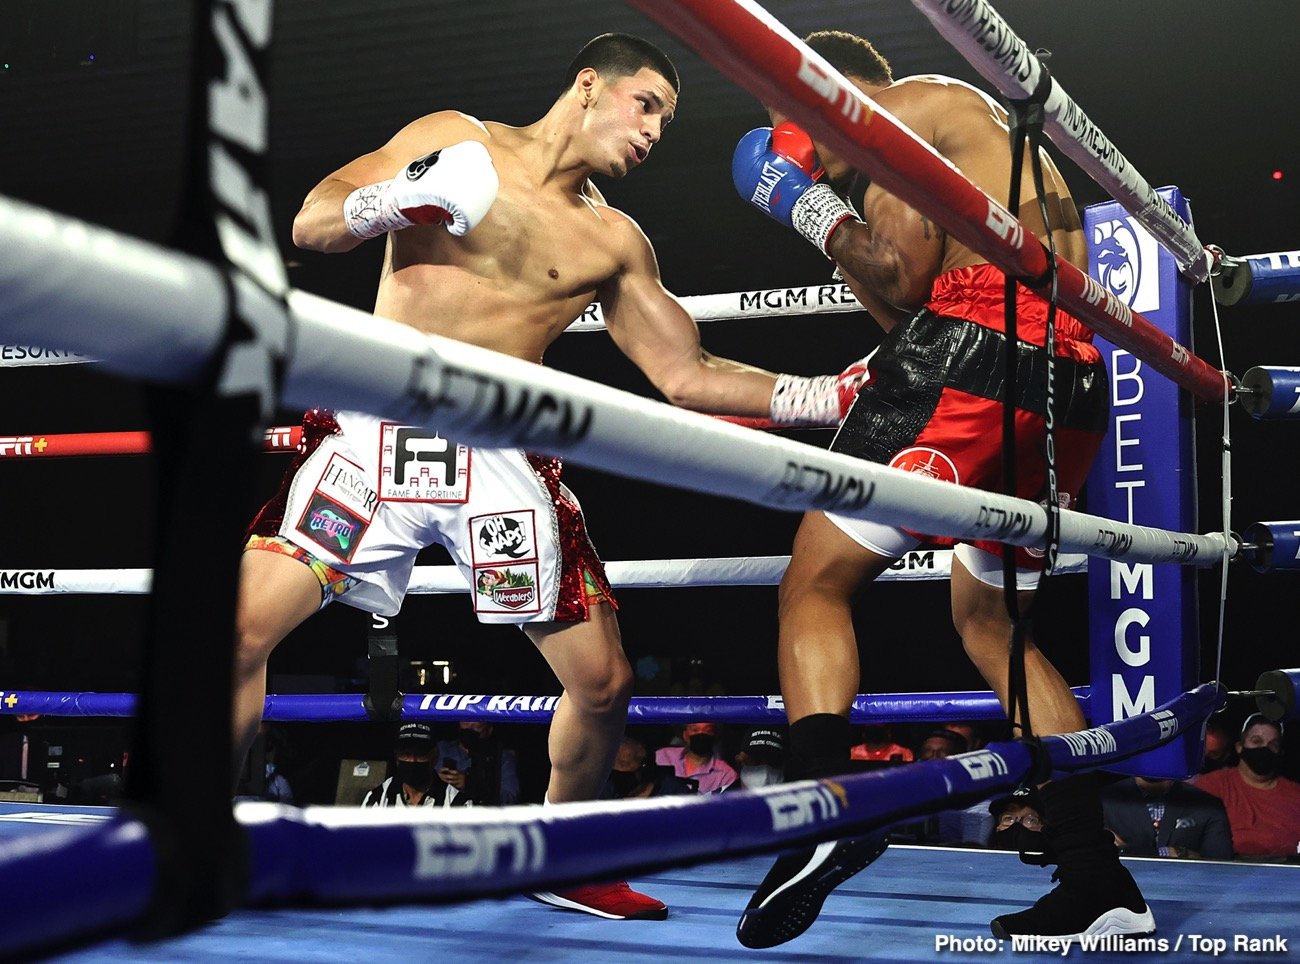 - Boxing News 24 boxing photo and news image